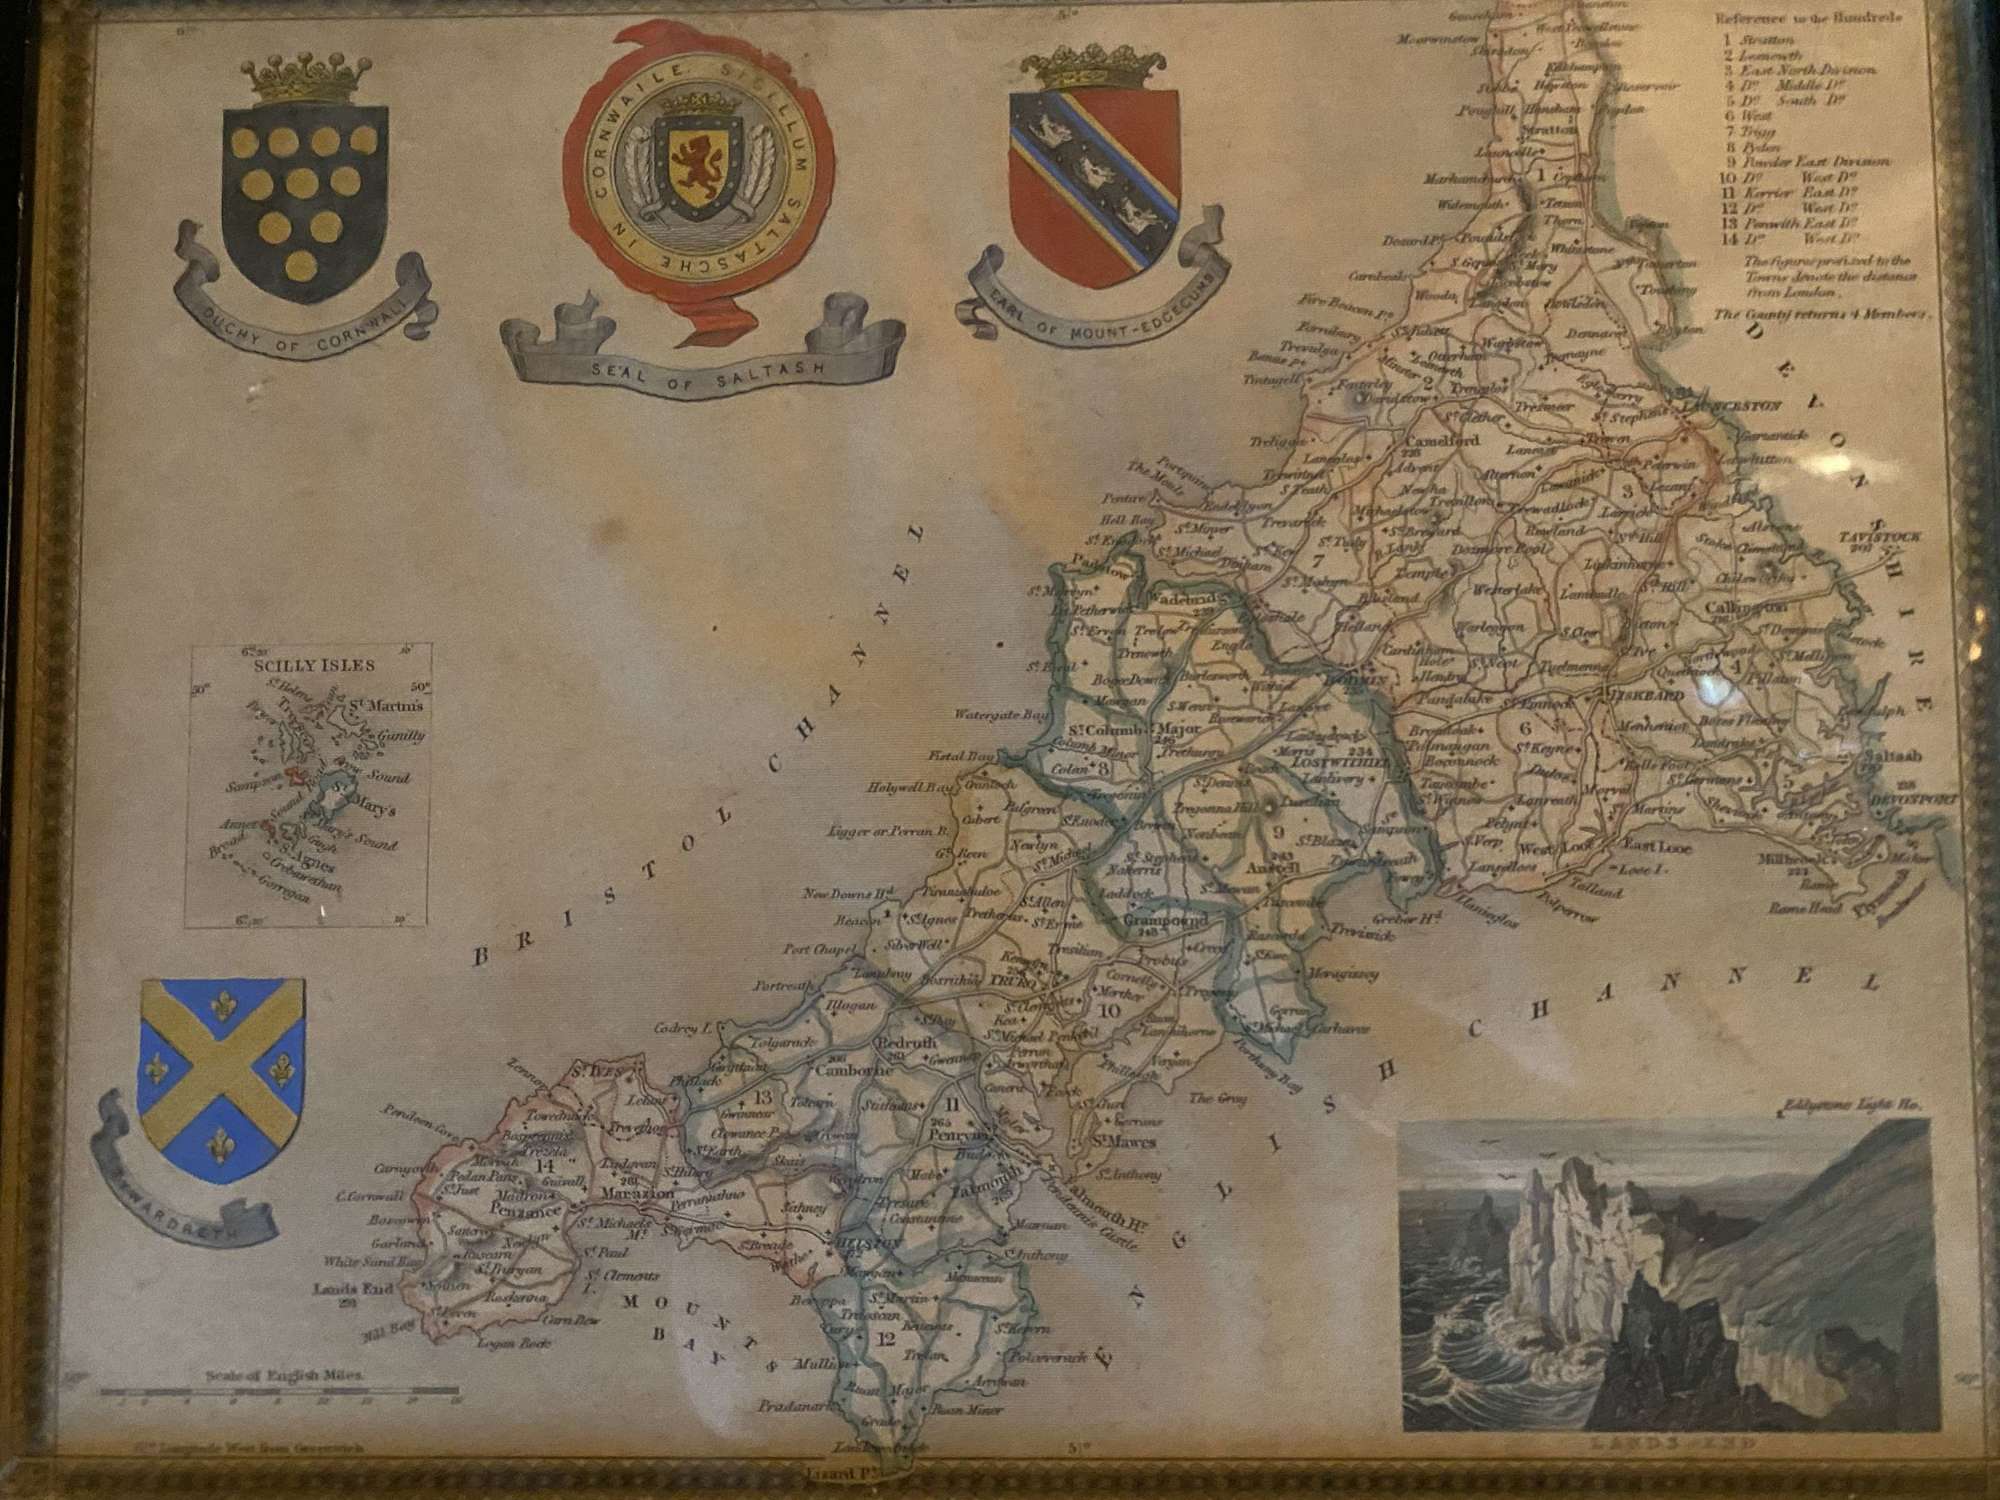 Printed map of Cornwall